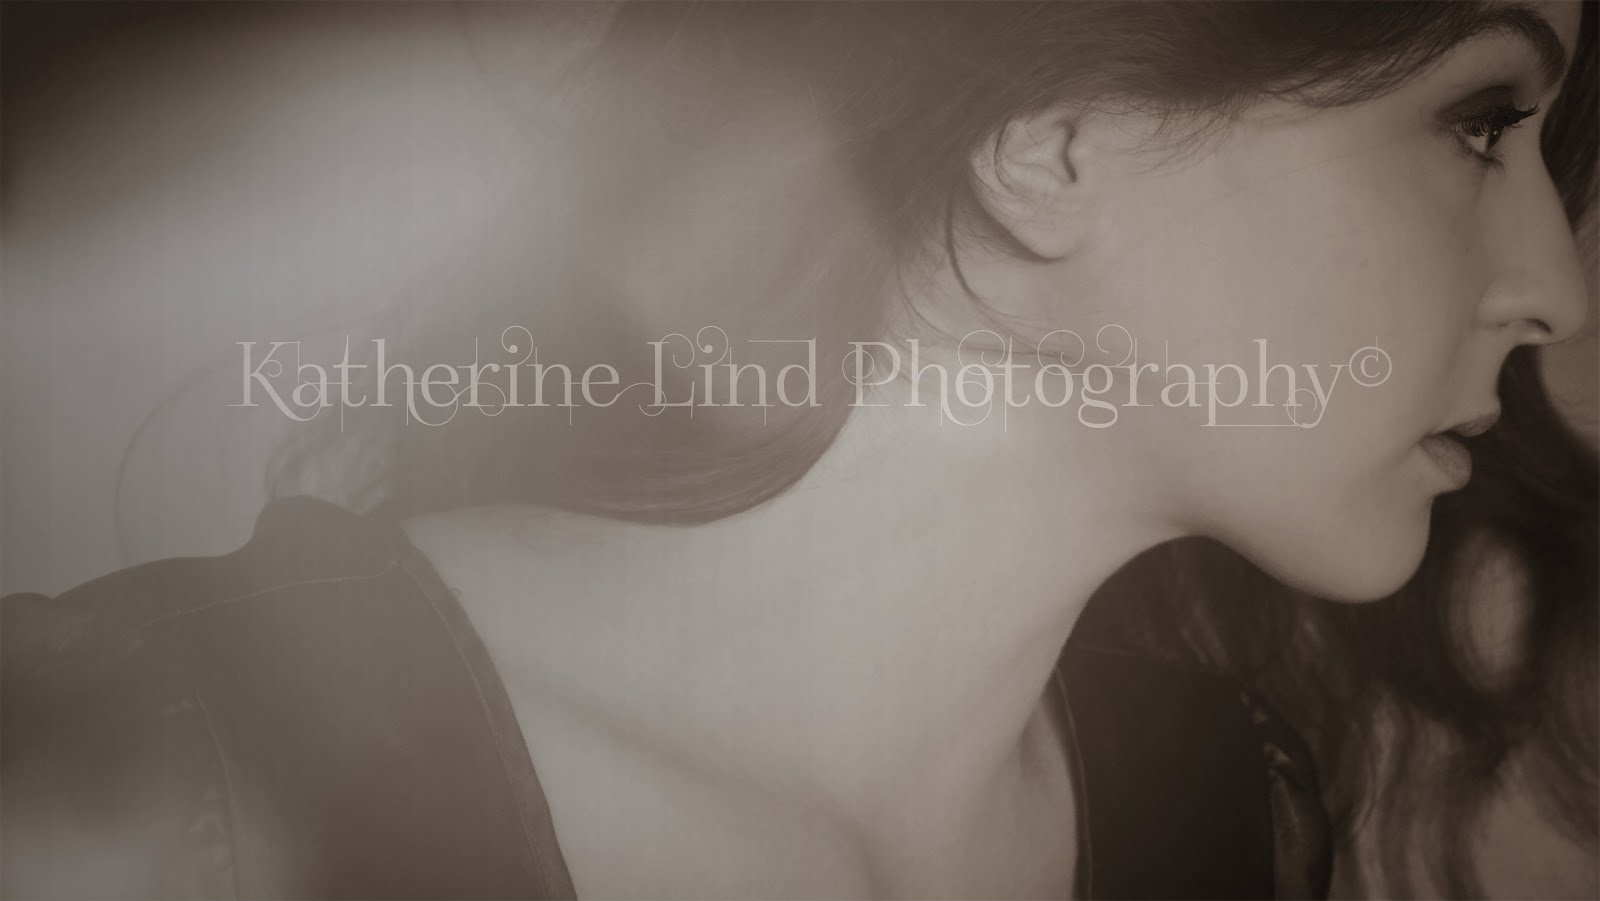 Katherine Lind Photography